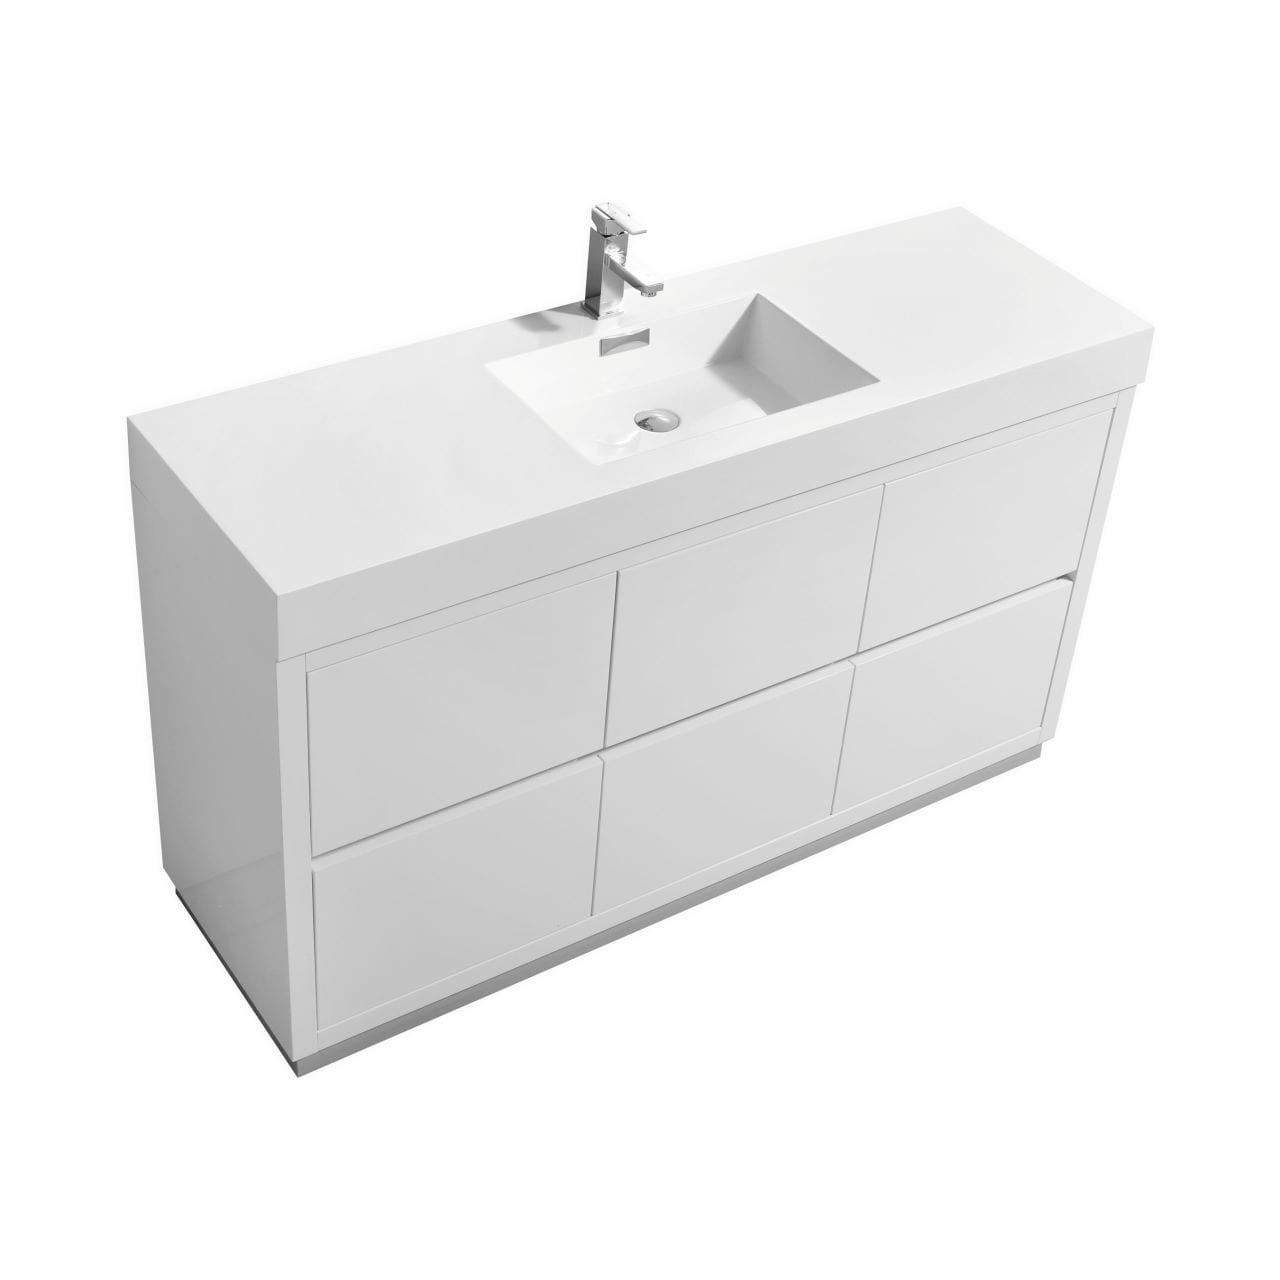 Kubebath 60 Inch Single Sink Vanity